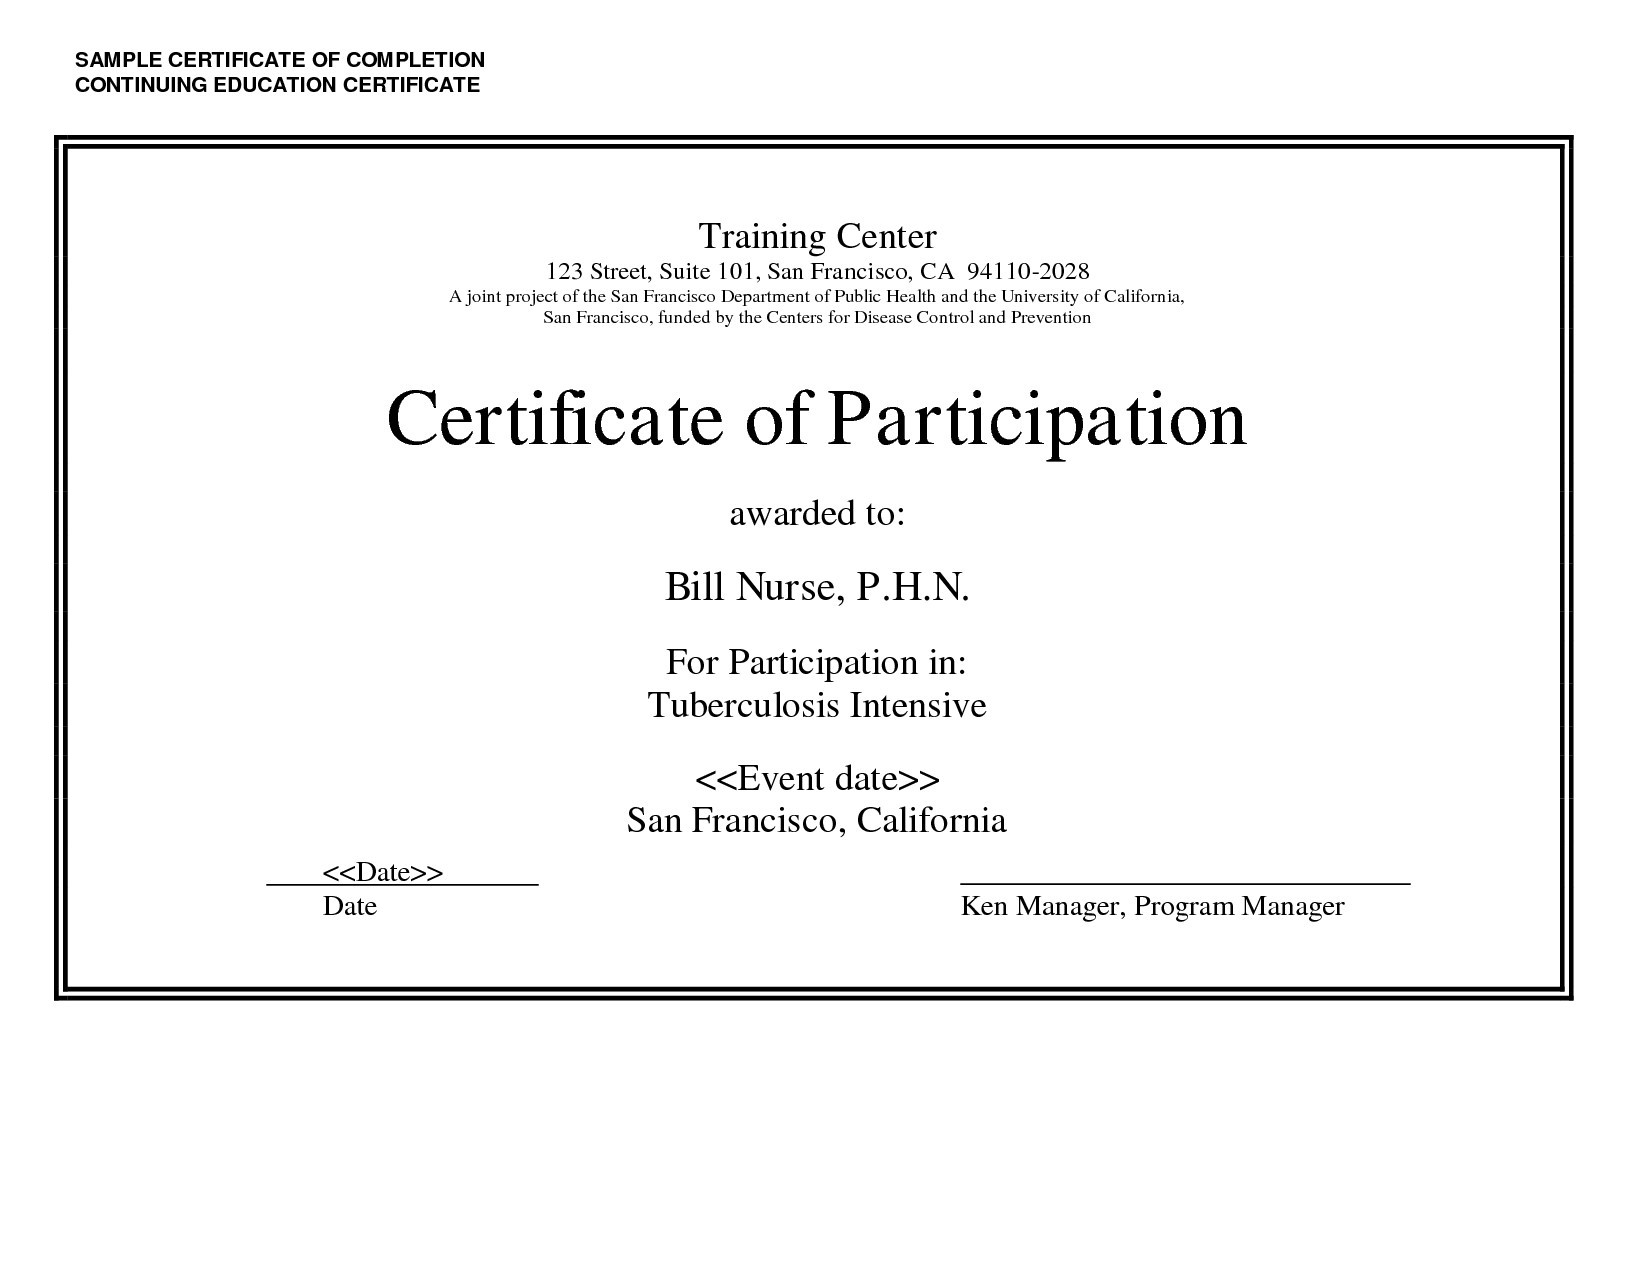 Education Certificate S Filename Infoe Link Continuing